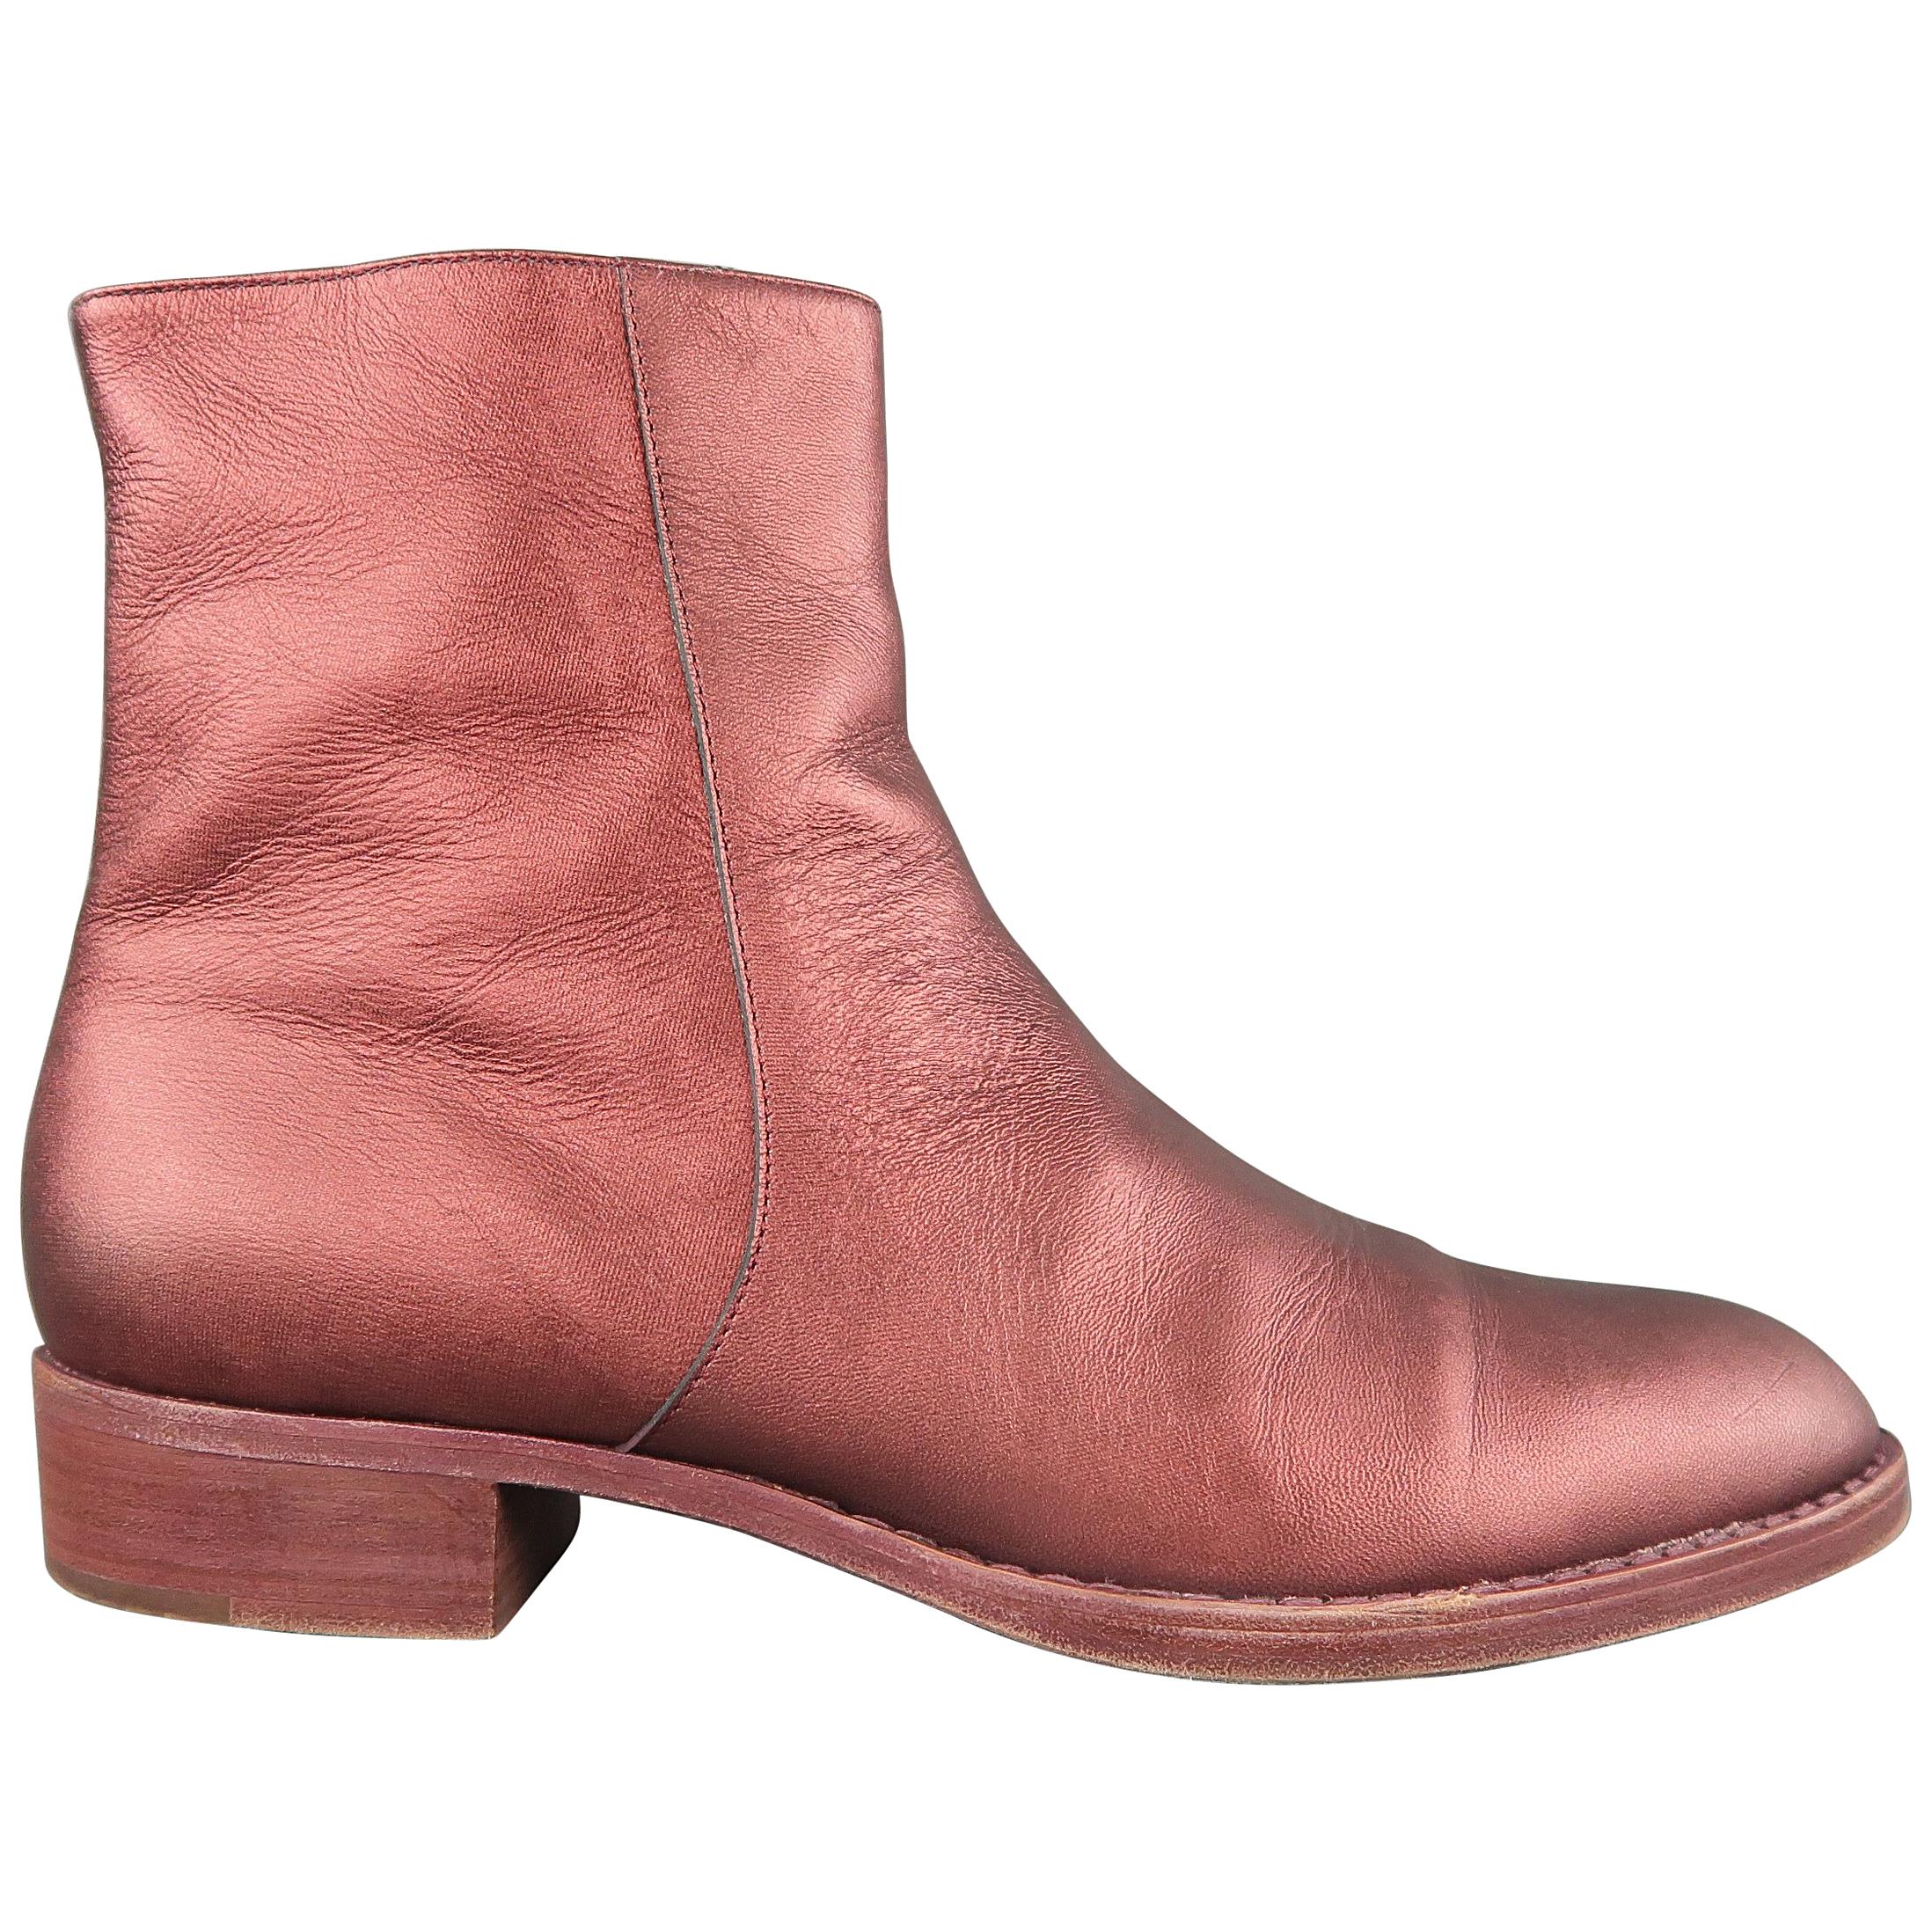 ELSA Size 10.5 Burgundy Metallic Leather Ankle Boots